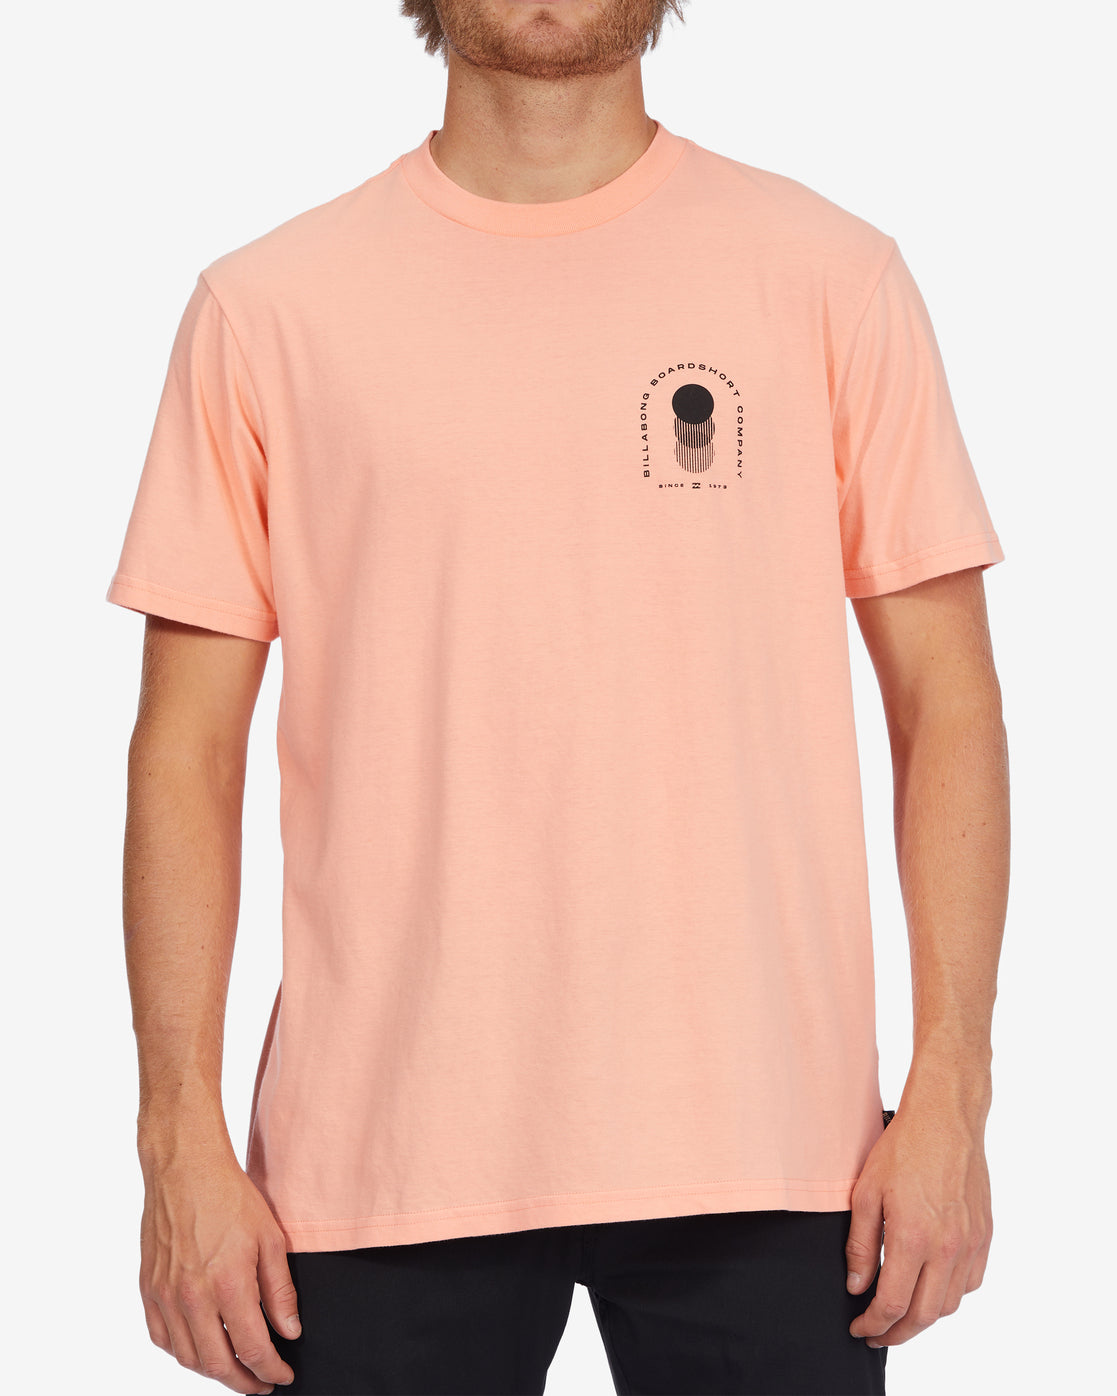 Steady Short Sleeve T-Shirt - ABYZT01288